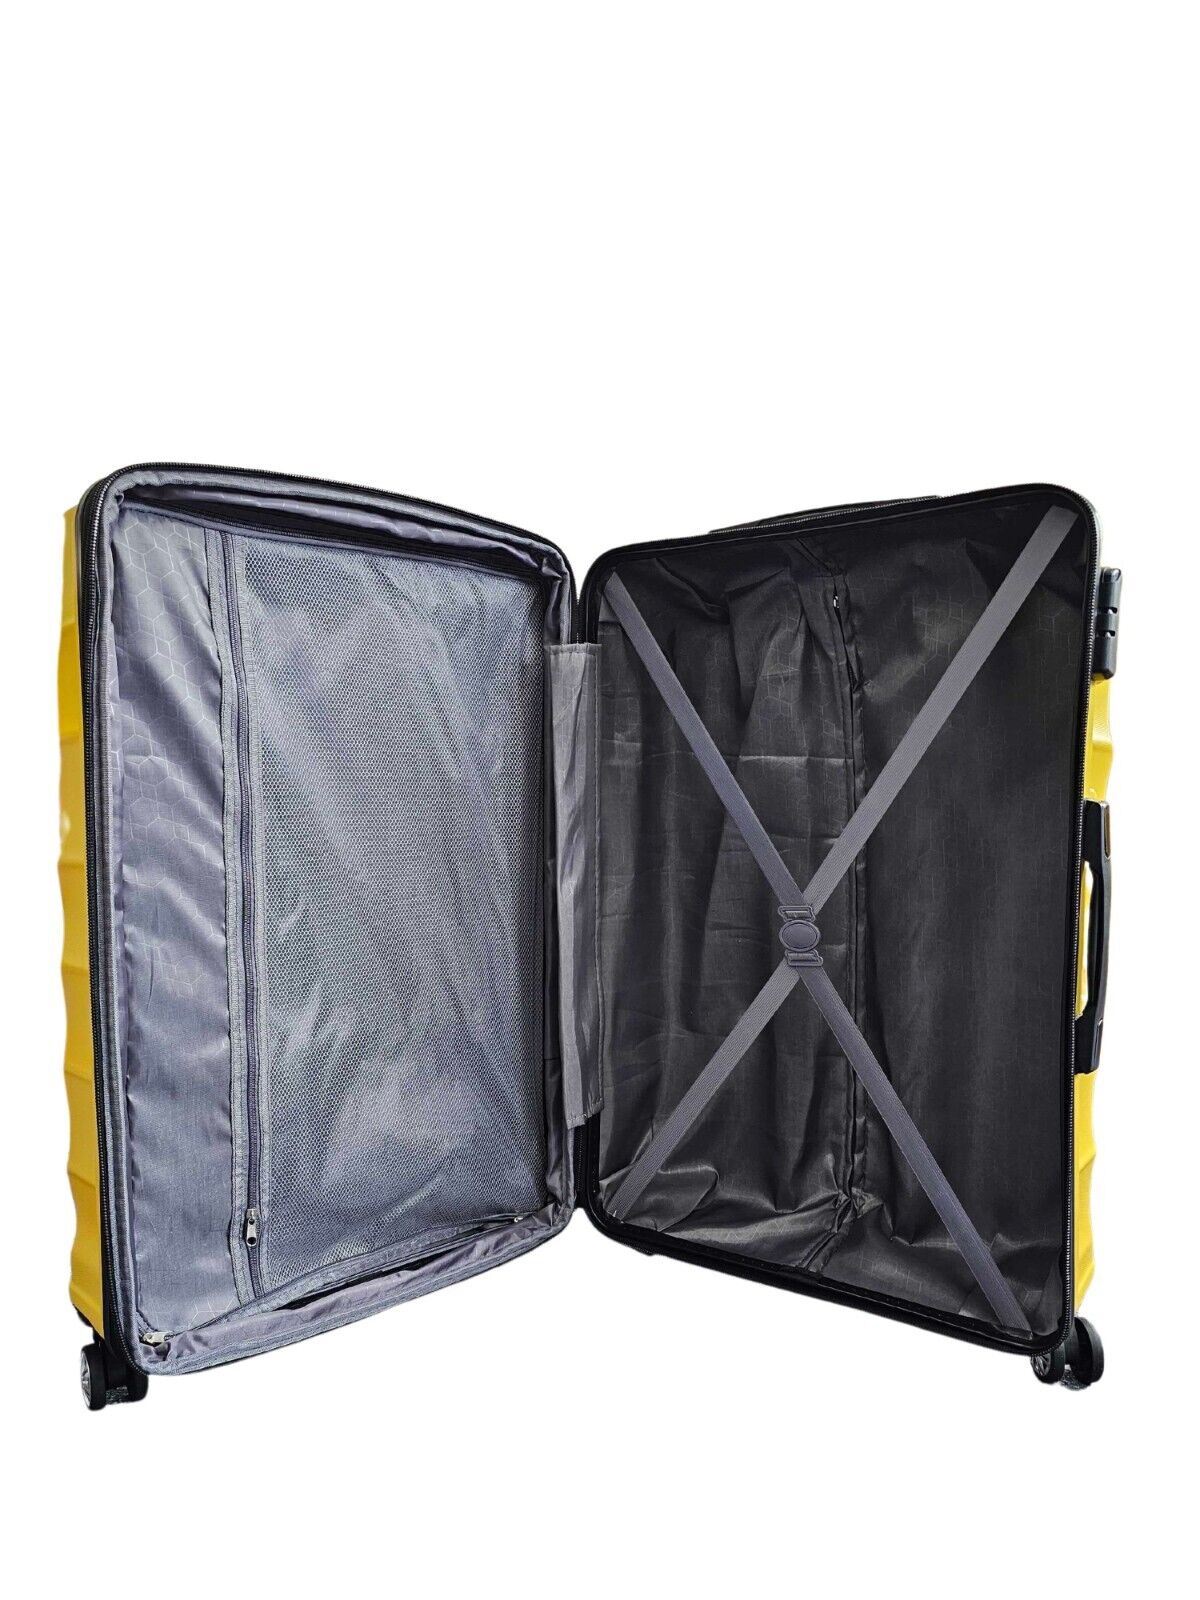 Chatom Medium Hard Shell Suitcase in Yellow